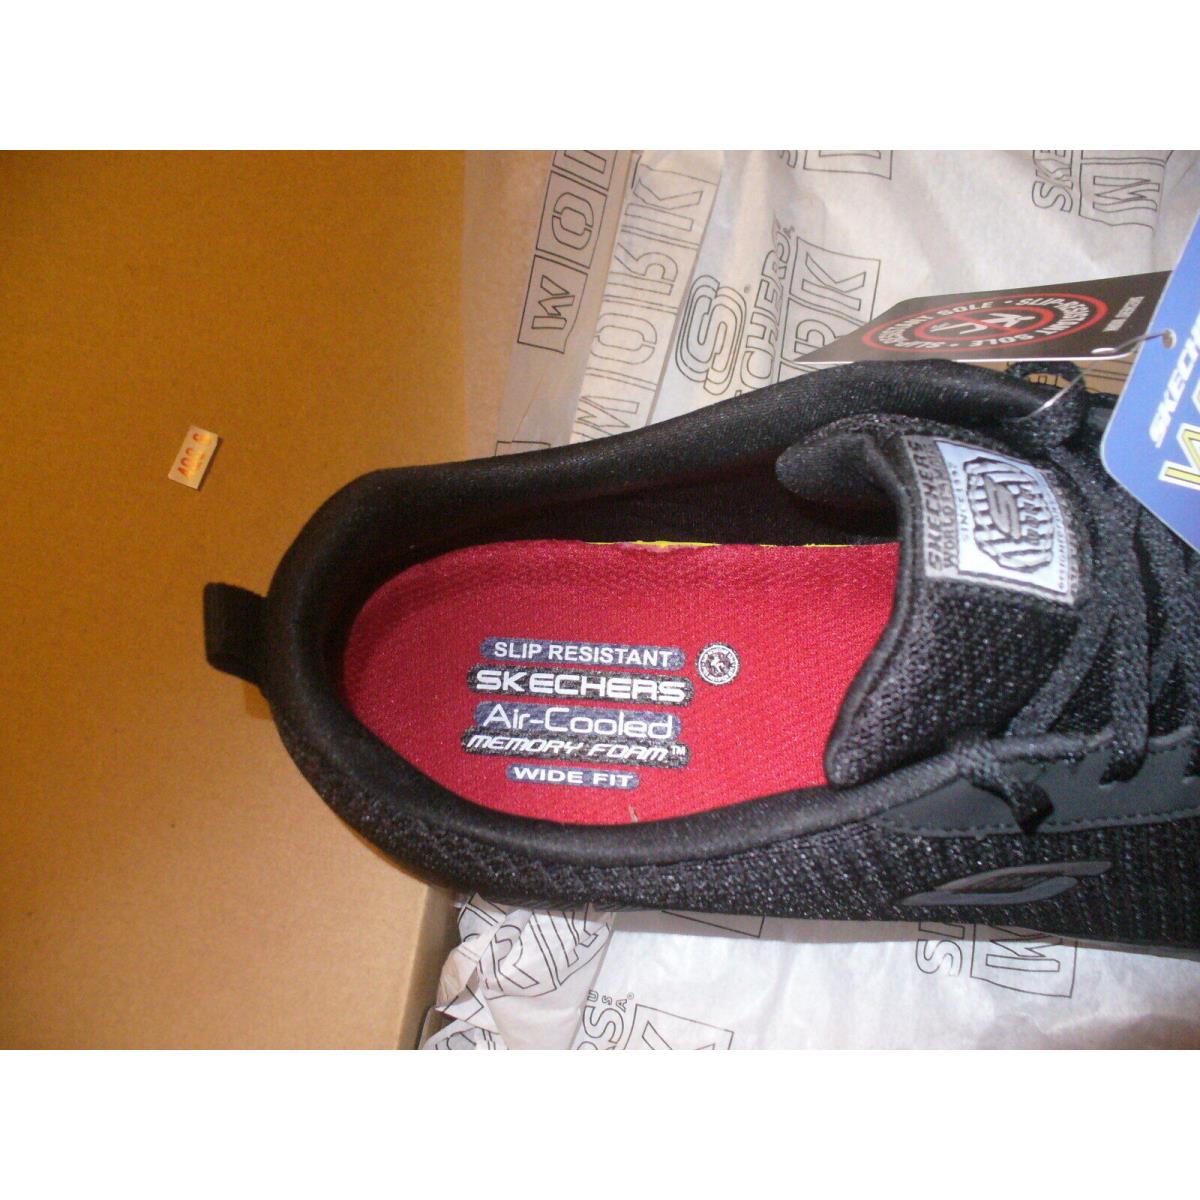 Skechers shoes  - Black 5